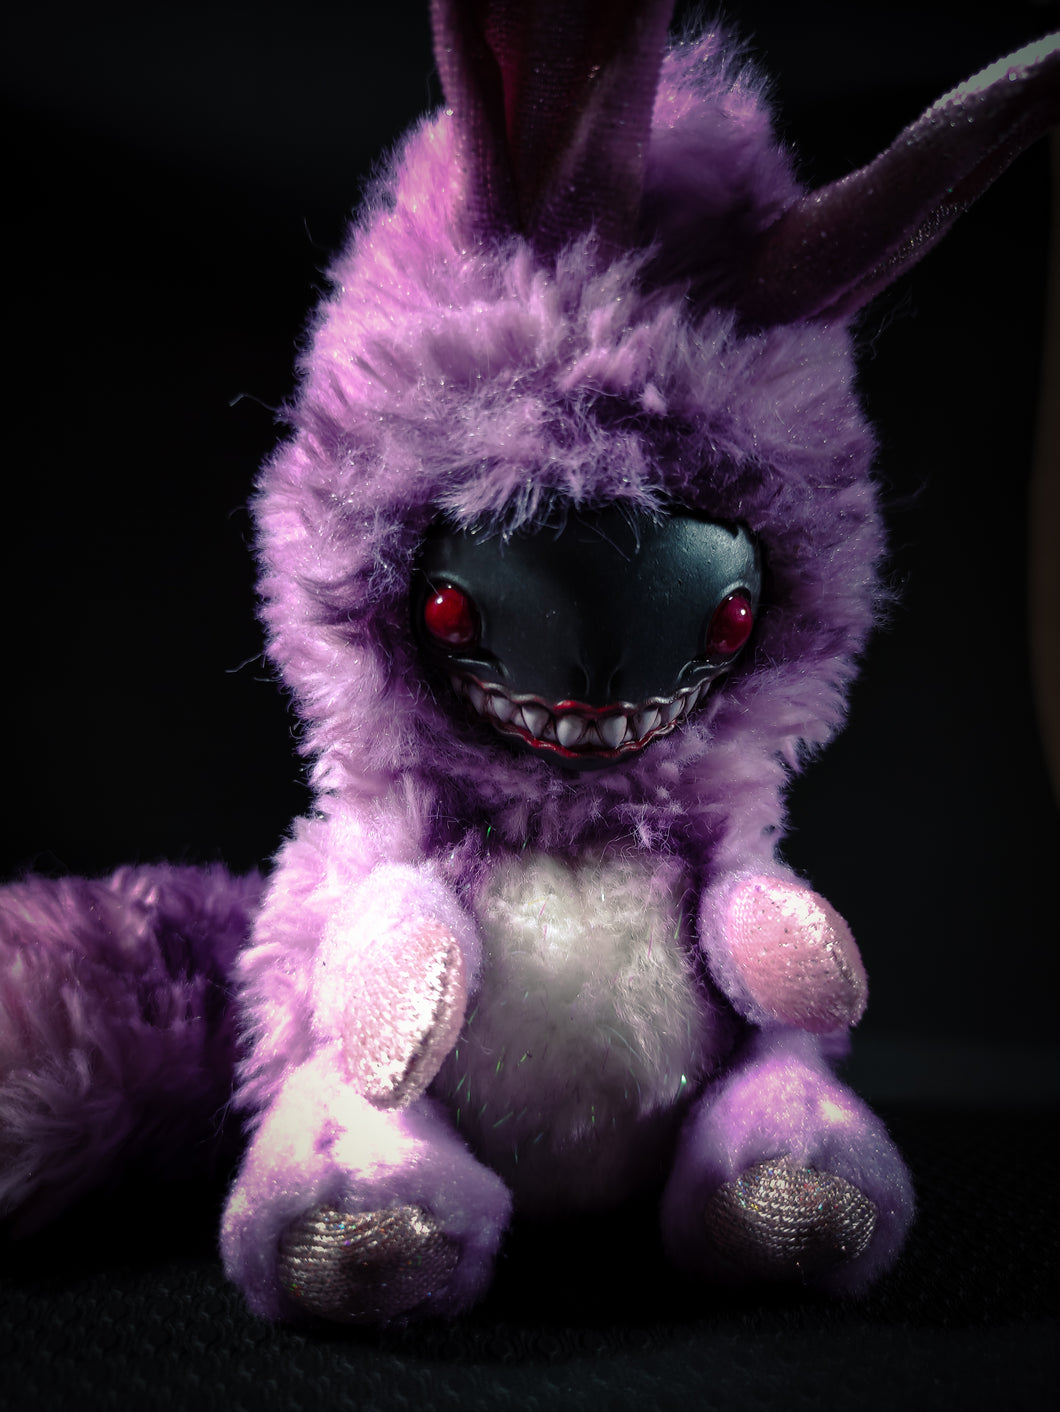 FRIEND Treacherous Twilight Flavour - Cryptid Art Doll Plush Toy